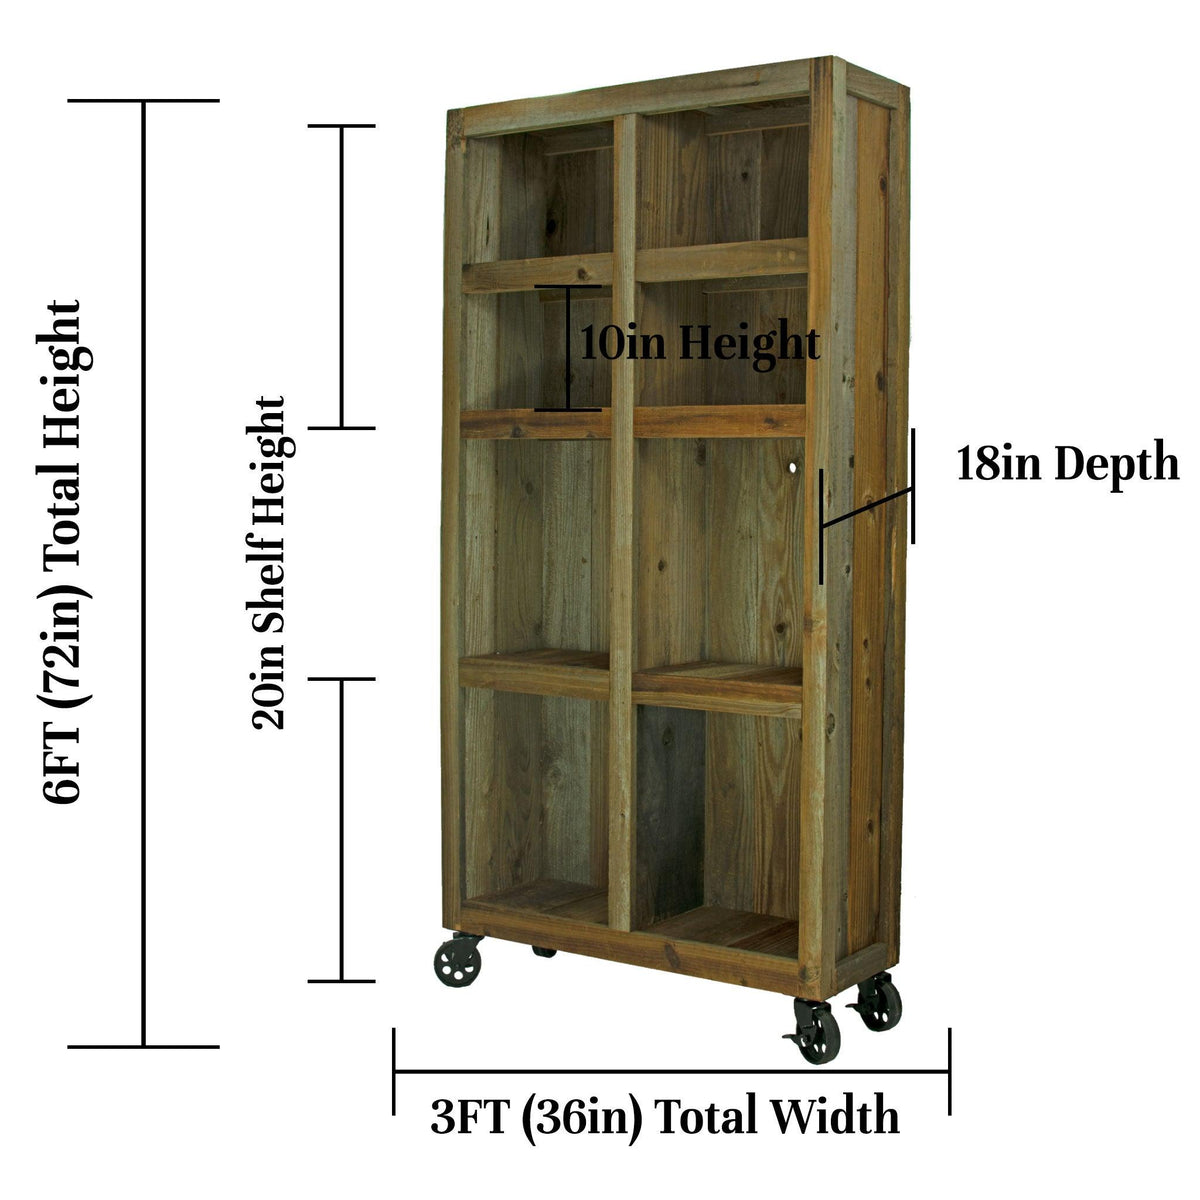 Storage Cabinet Shelf Spacing